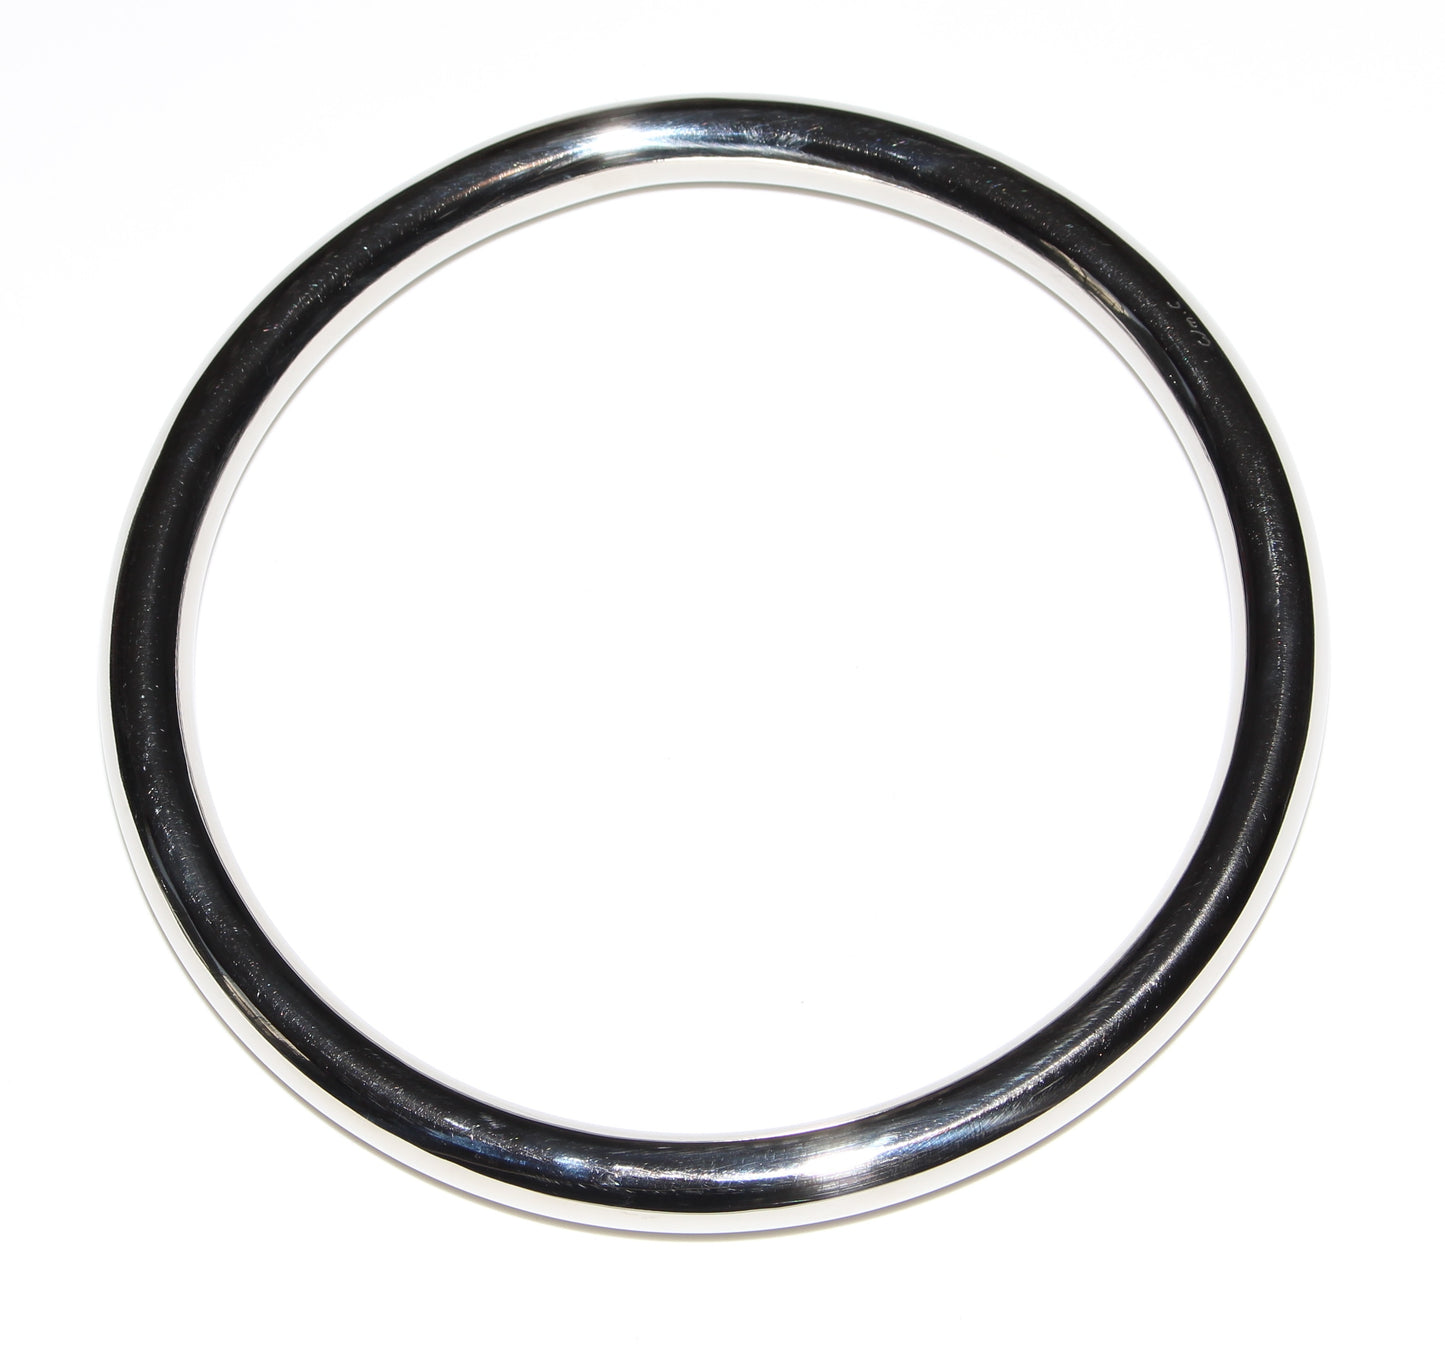 Lewbari Stainless Steel Suspension Ring